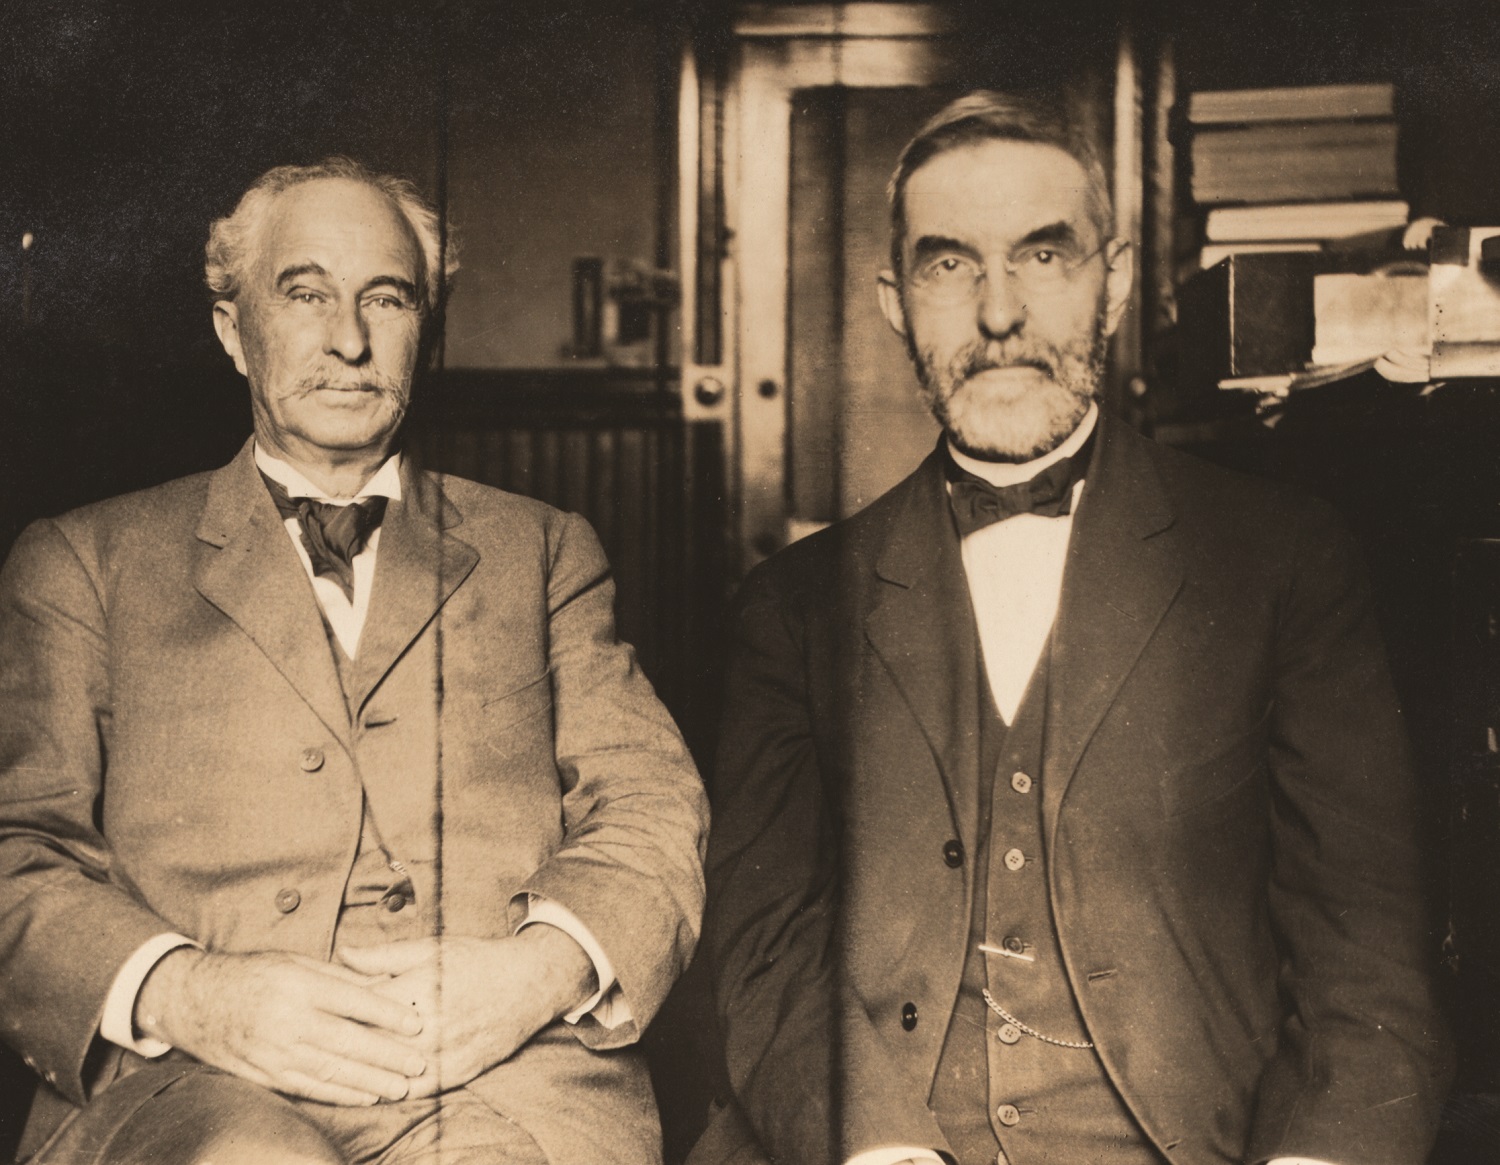 Engineers A. B. Nichols and John C. Trautwine, Jr. in Philadelphia, 1905.